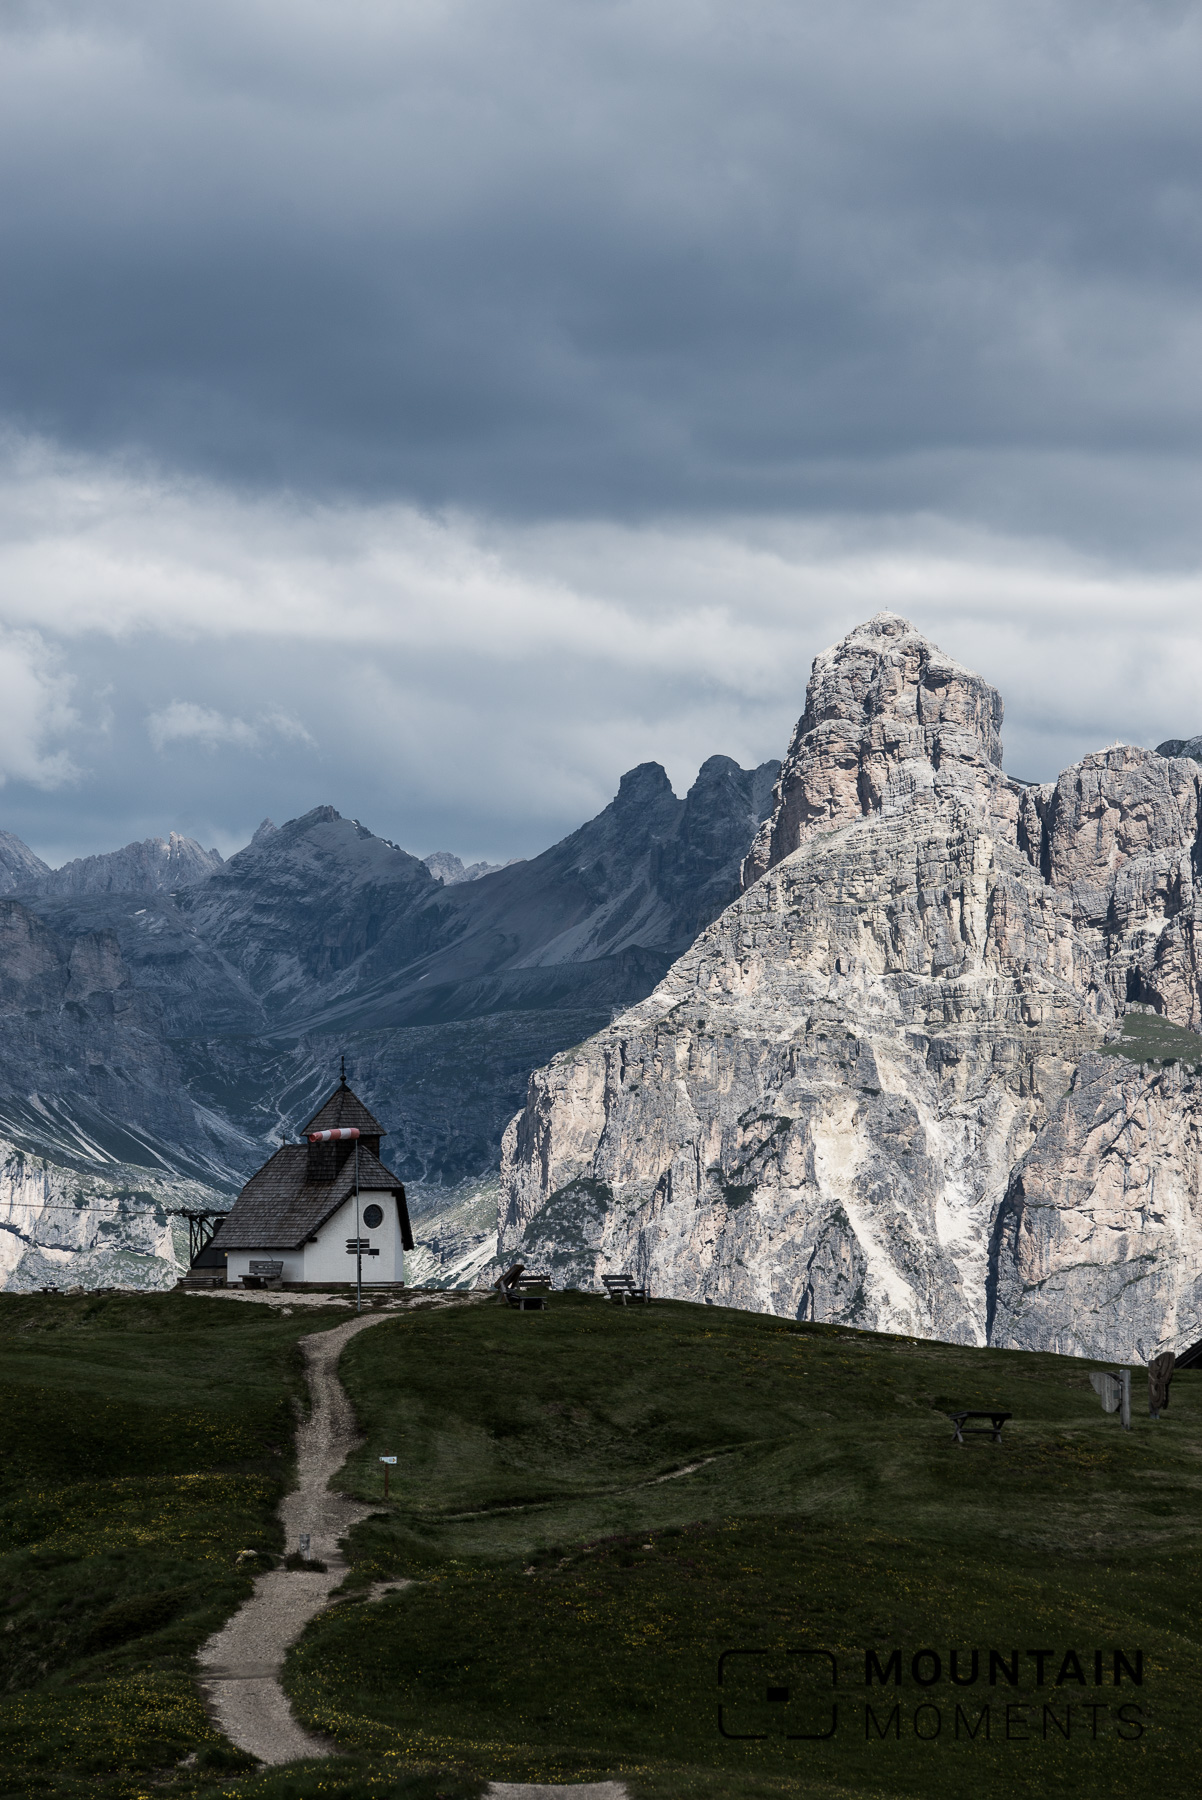 Karersee, Fotospot Dolomiten, fotowandern dolomiten, photo hike dolomites, sightseeing dolomites, sassongher